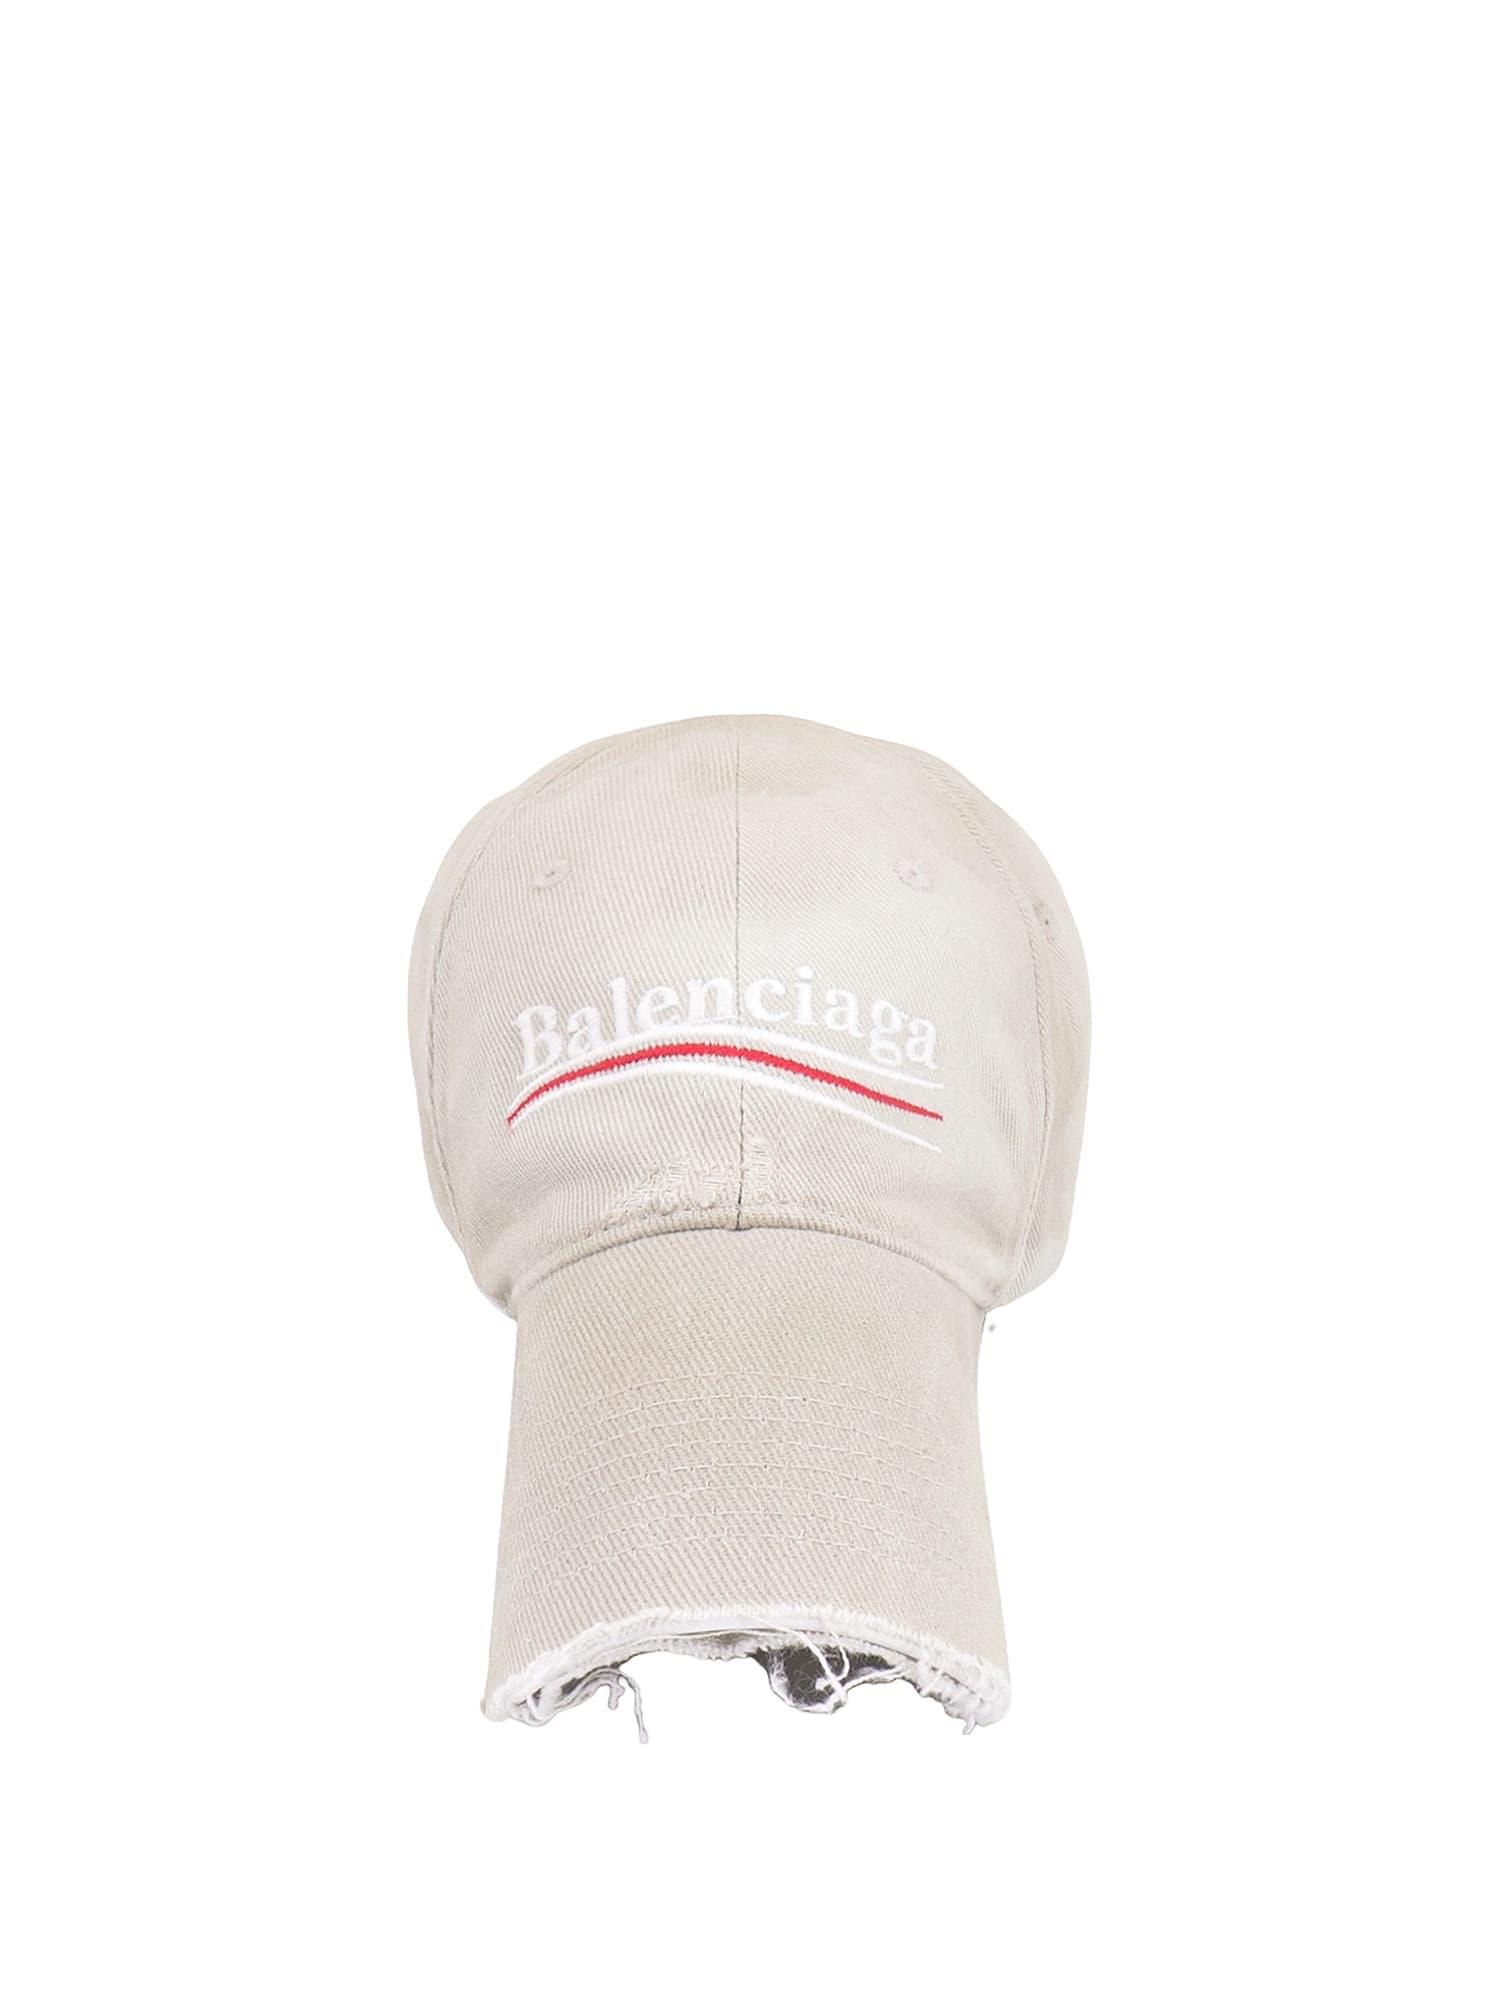 Balenciaga Classic baseball cap for Women  White in KSA  Level Shoes